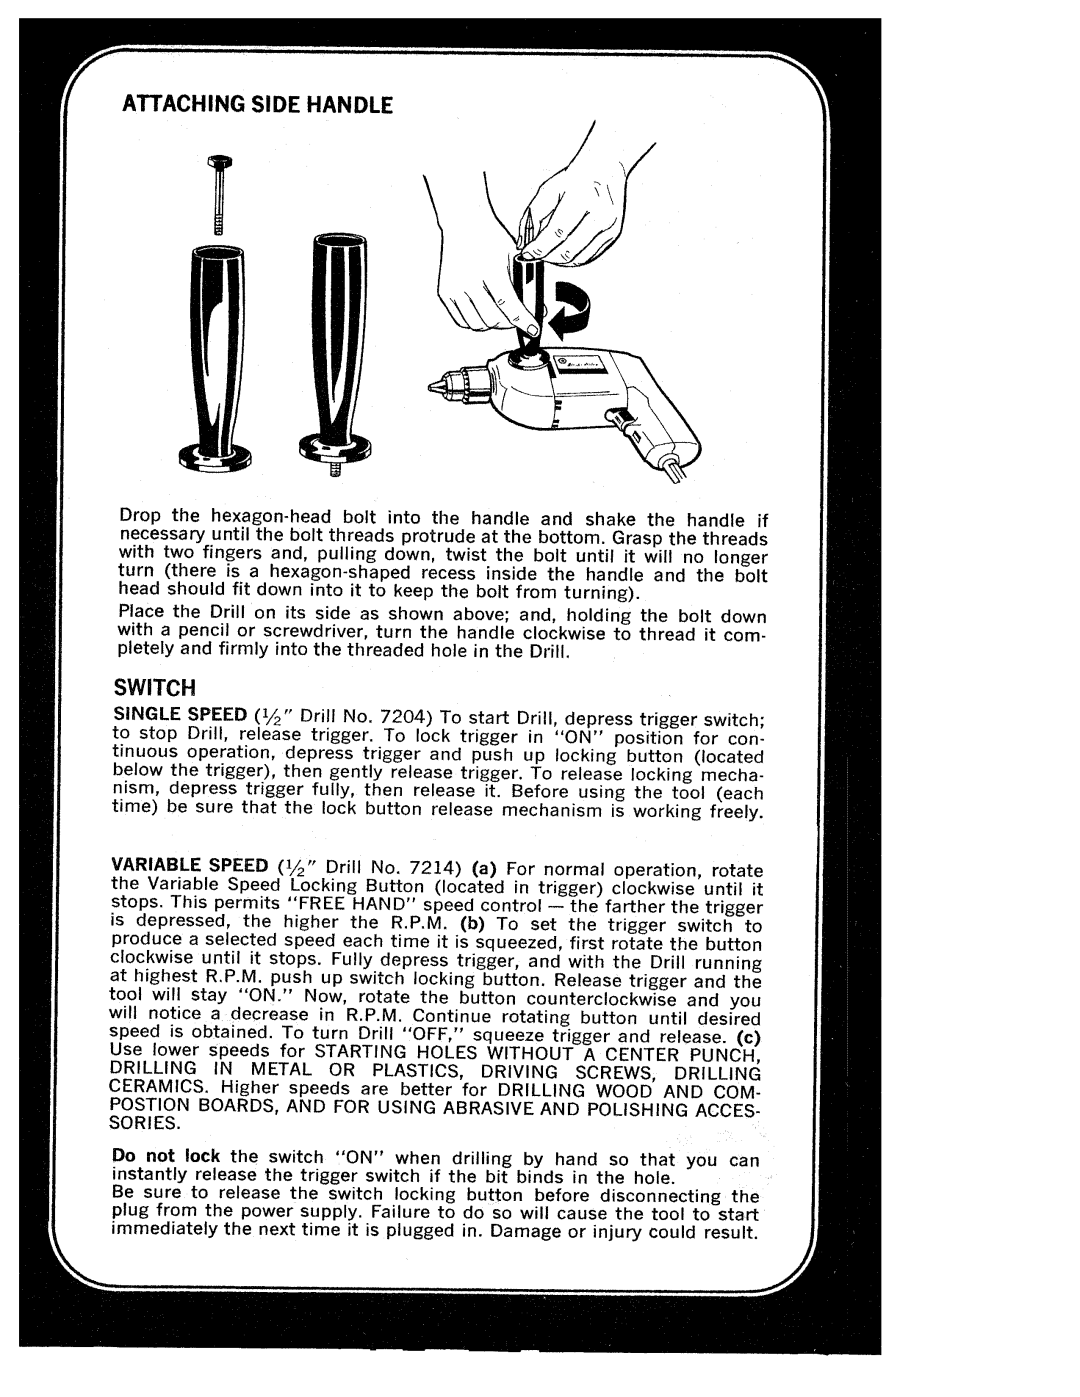 Black & Decker 7204, 7214 manual 